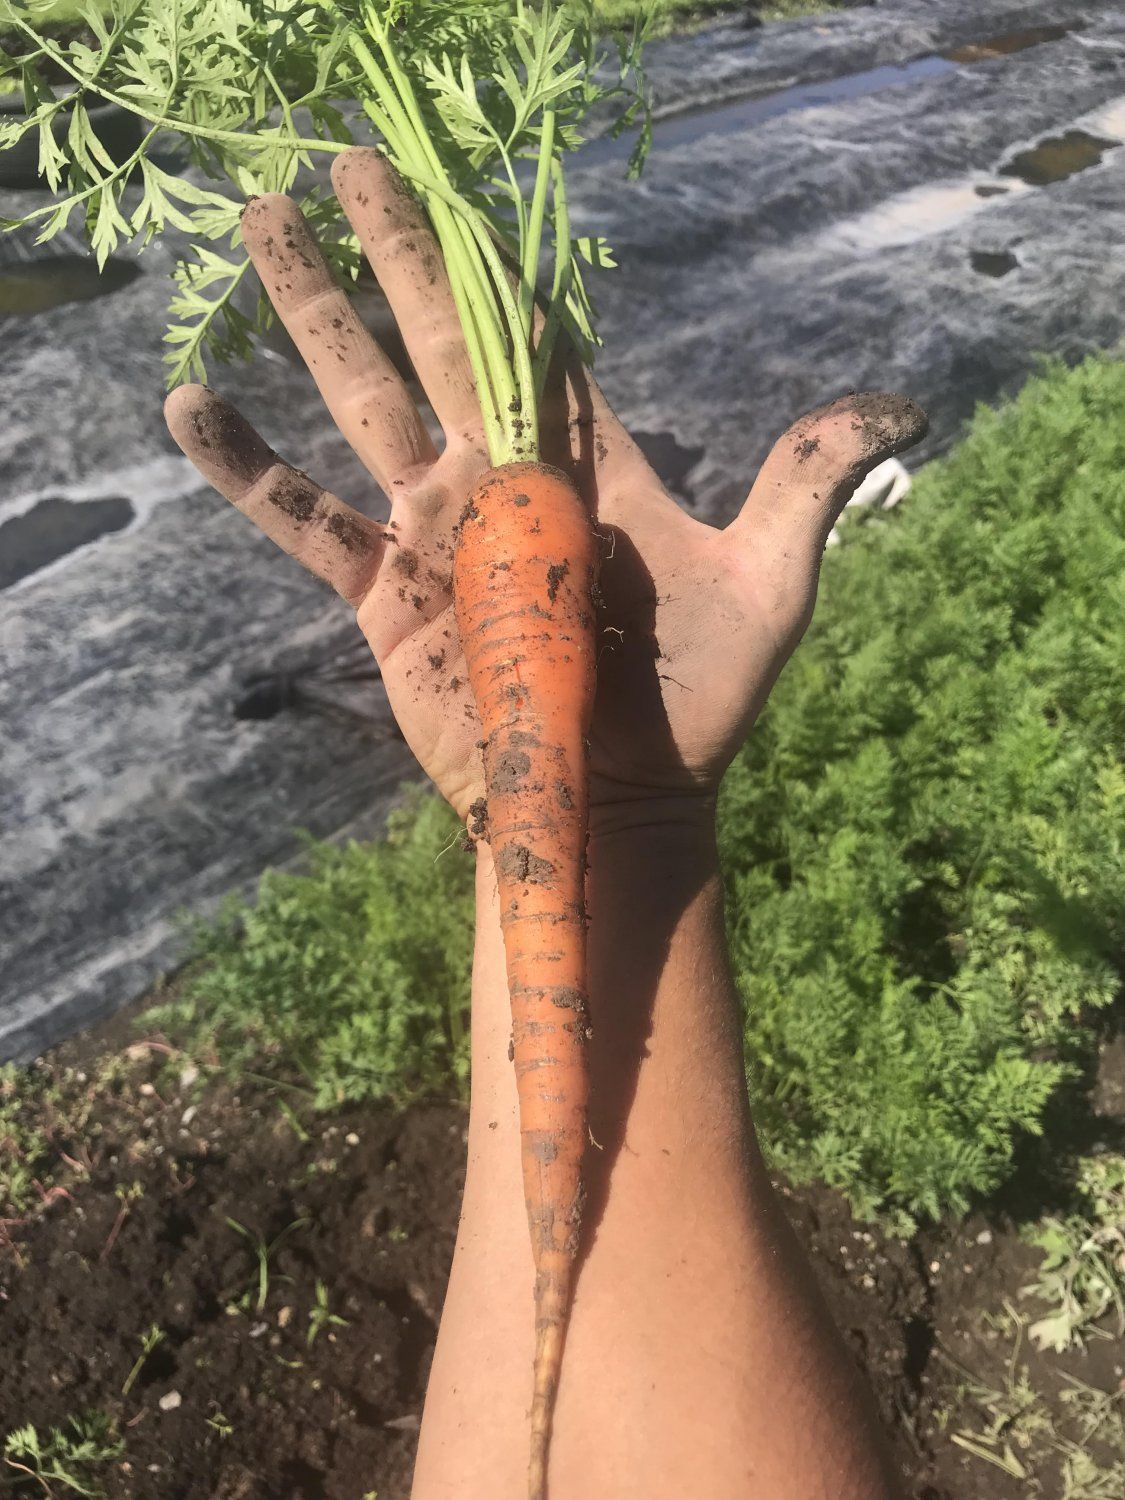 Next Happening: Common Roots Urban Farm Newsletter Week #9